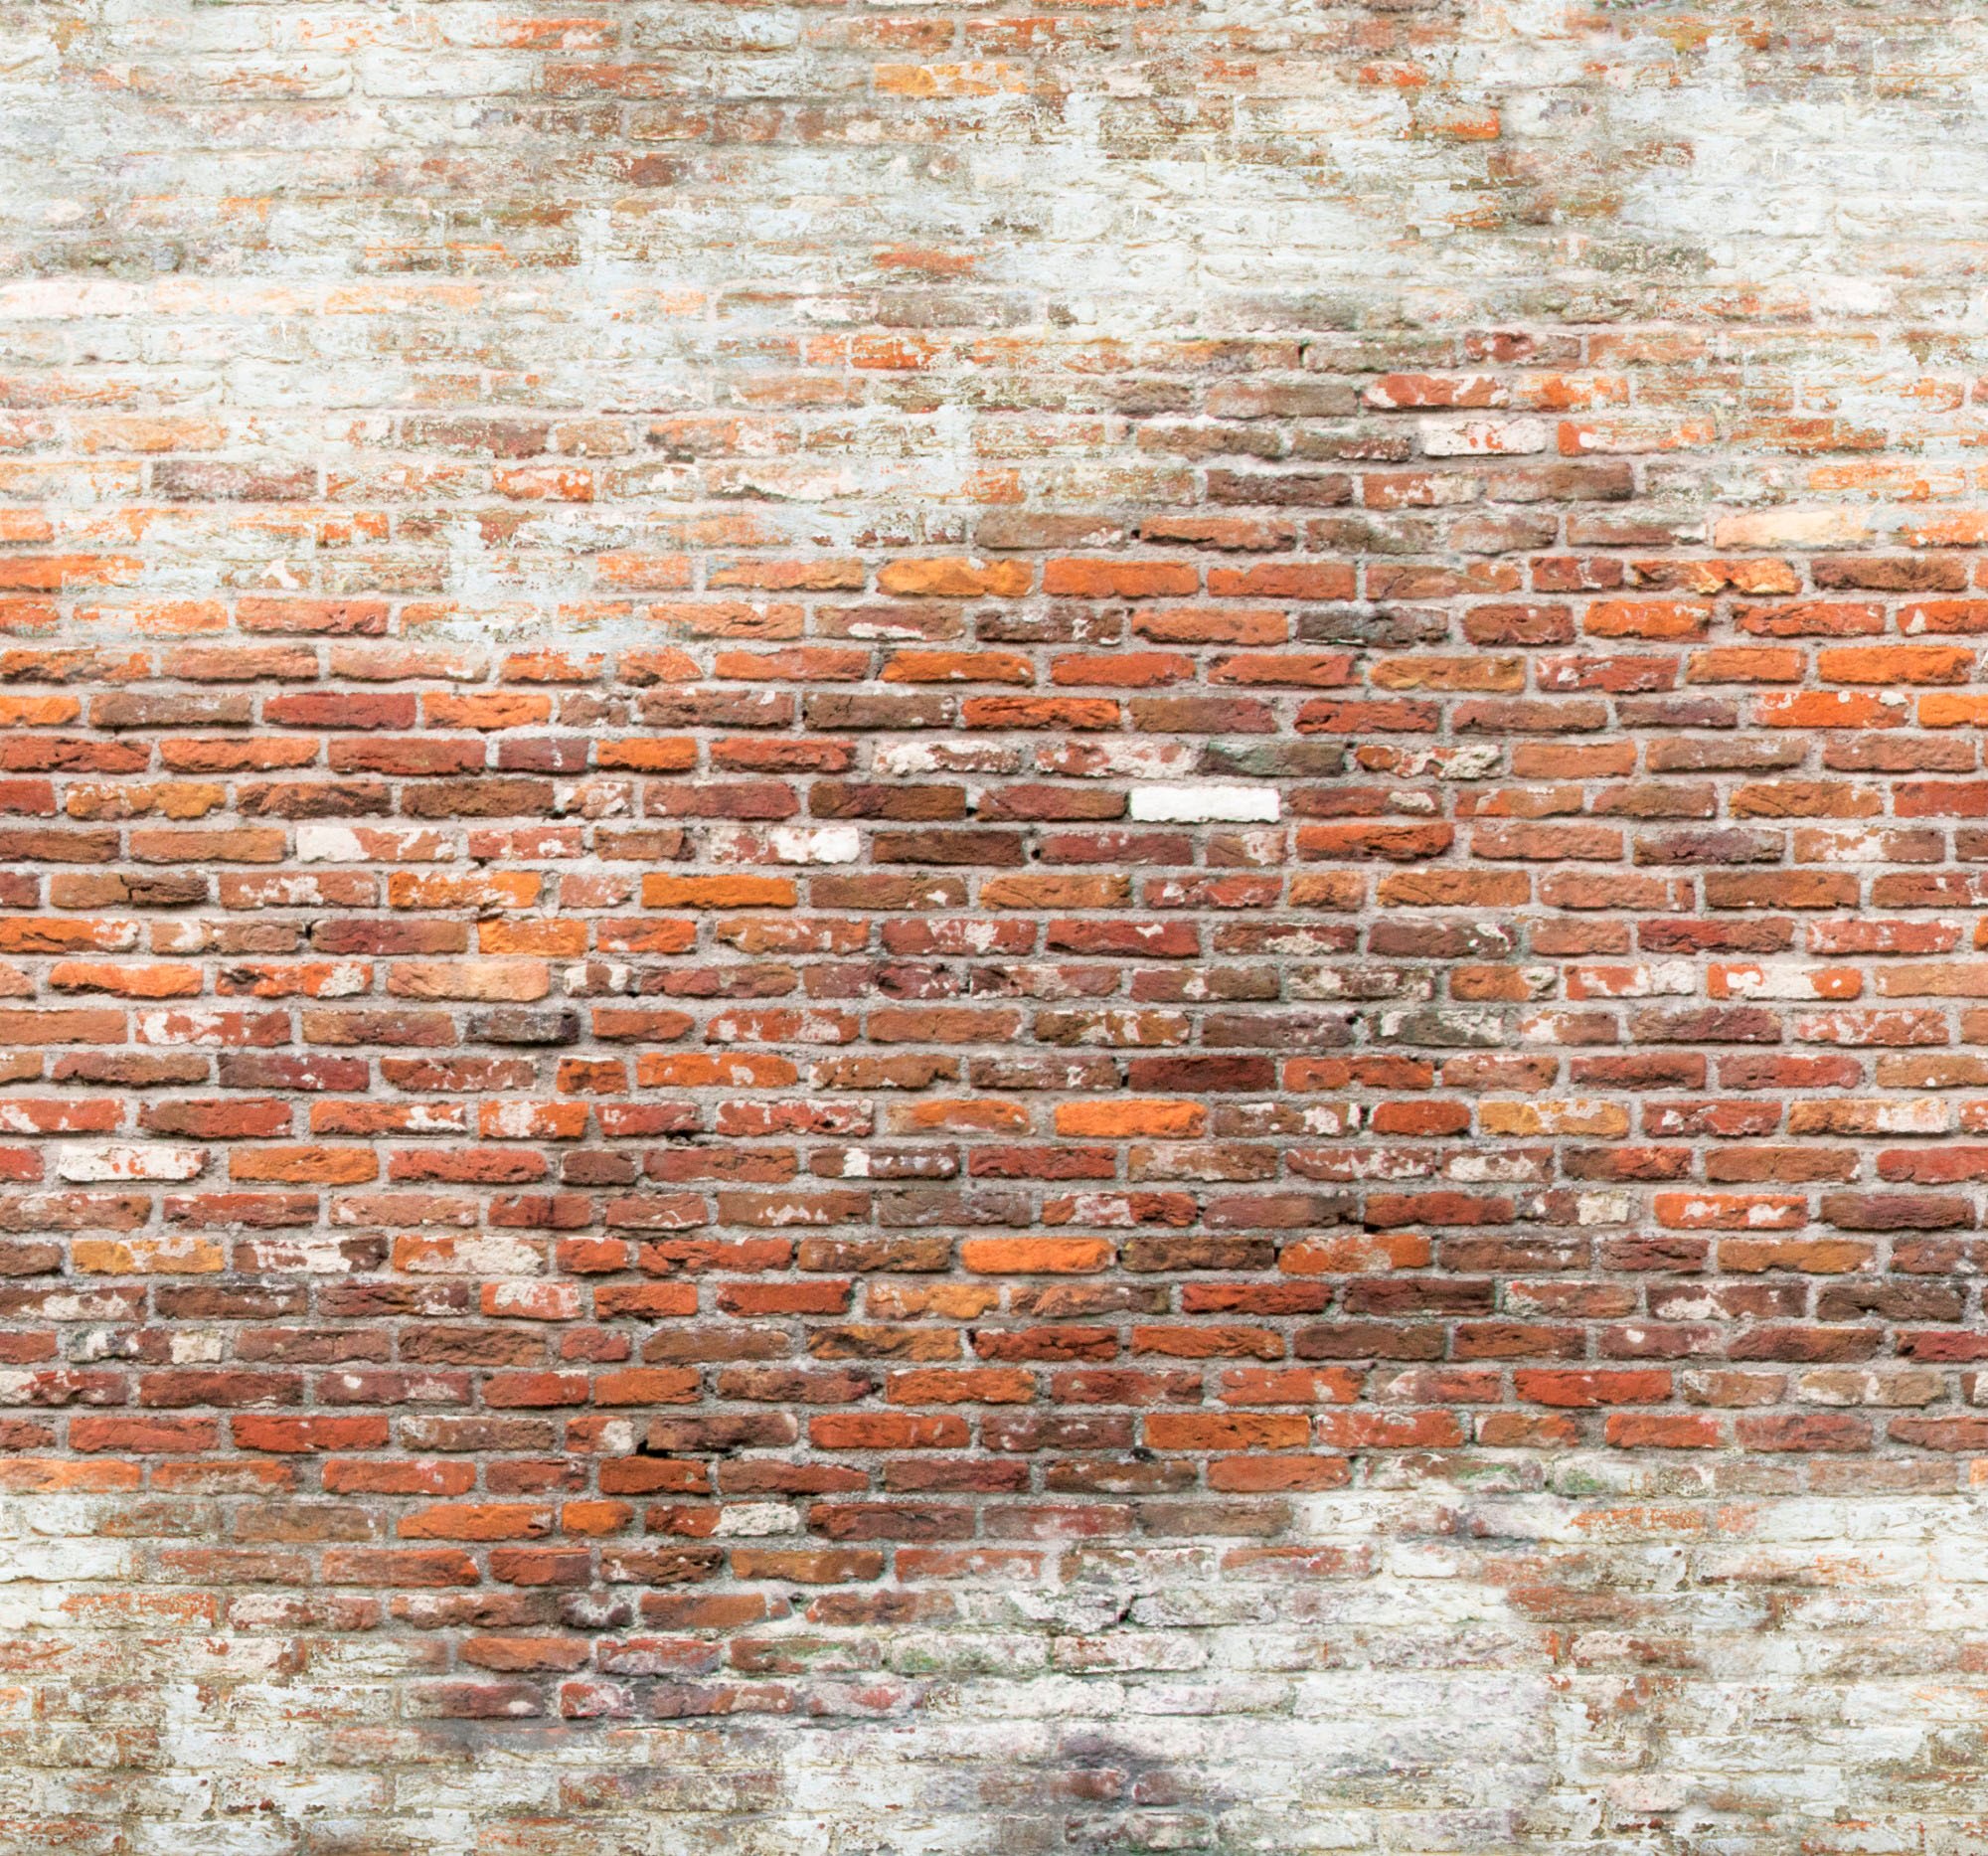 Art for the home Fototapete »Brick wall 2«, 300 cm Länge